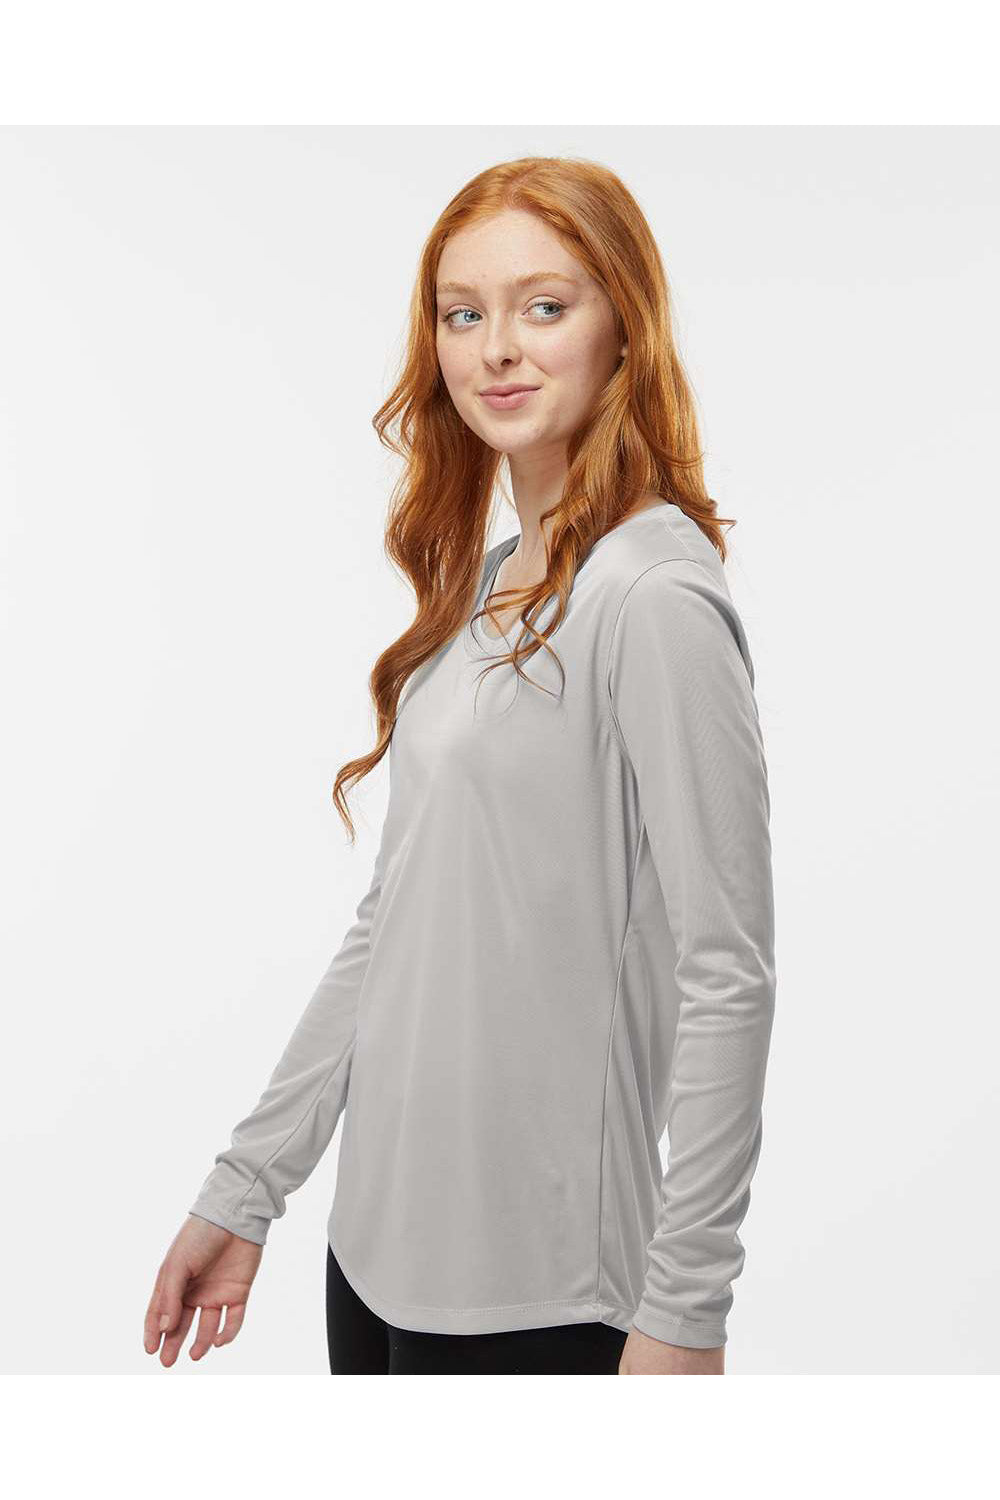 Paragon 214 Womens Islander Performance Long Sleeve Scoop Neck T-Shirt Aluminum Grey Model Side